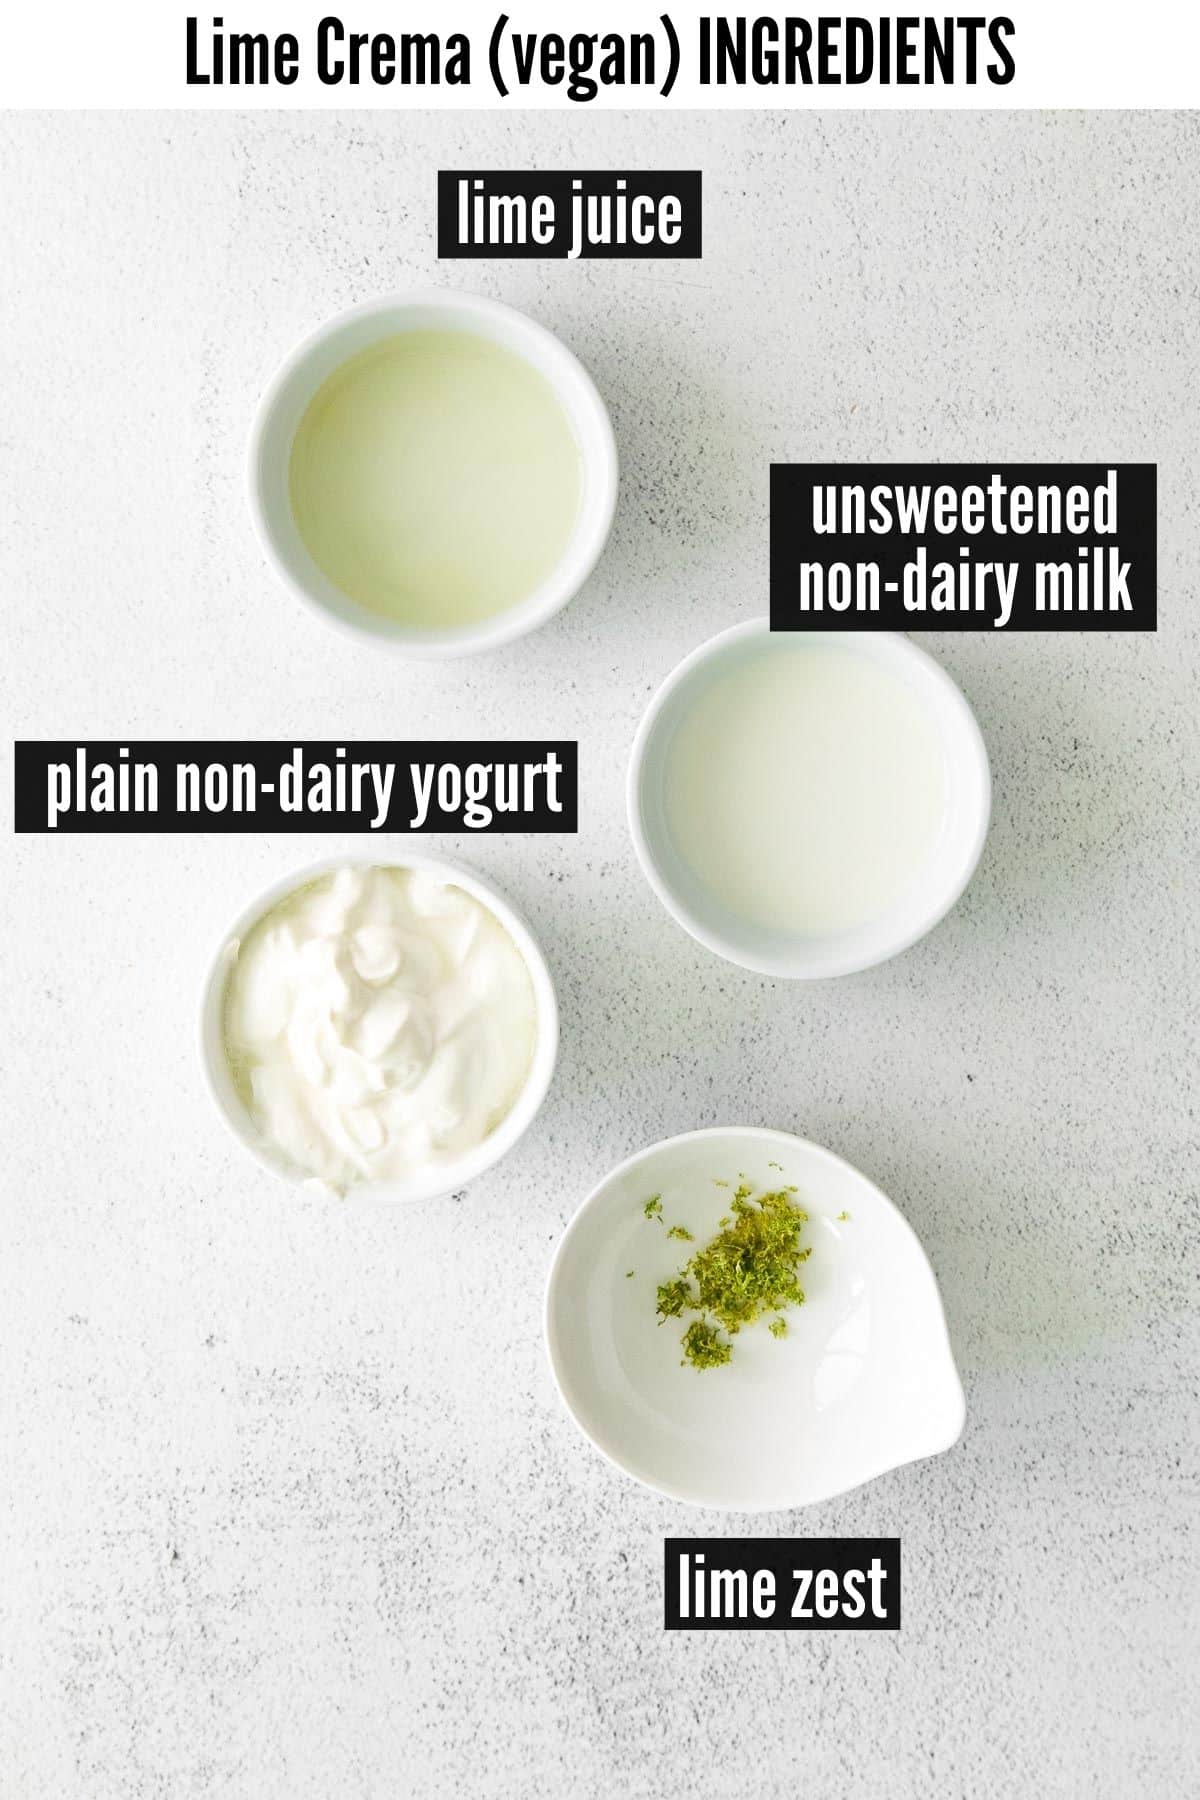 vegan lime crema labelled ingredients